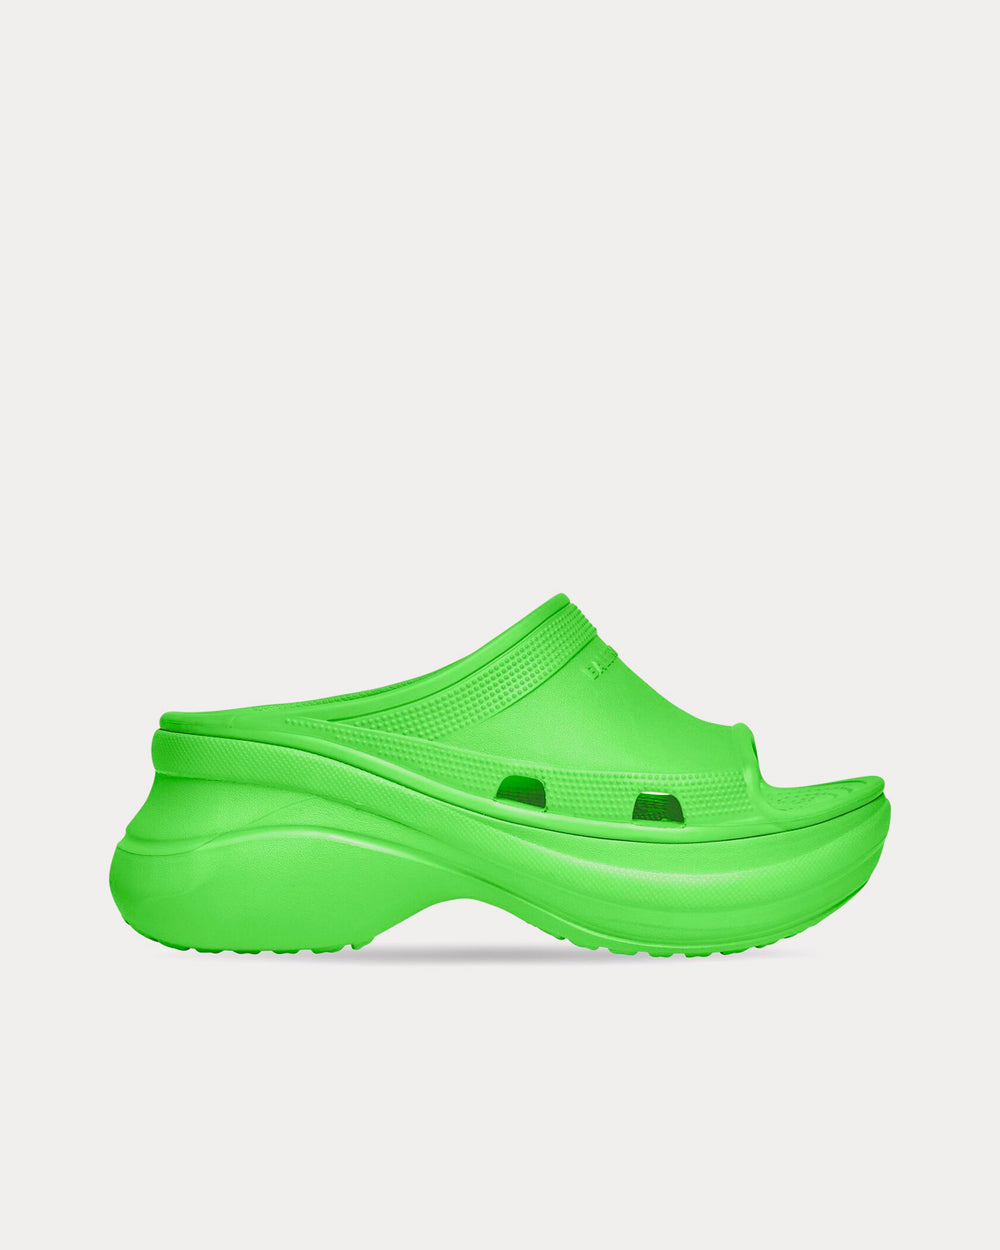 Balenciaga x Crocs Pool Rubber Neon Green Slide Sandals - Sneak in Peace